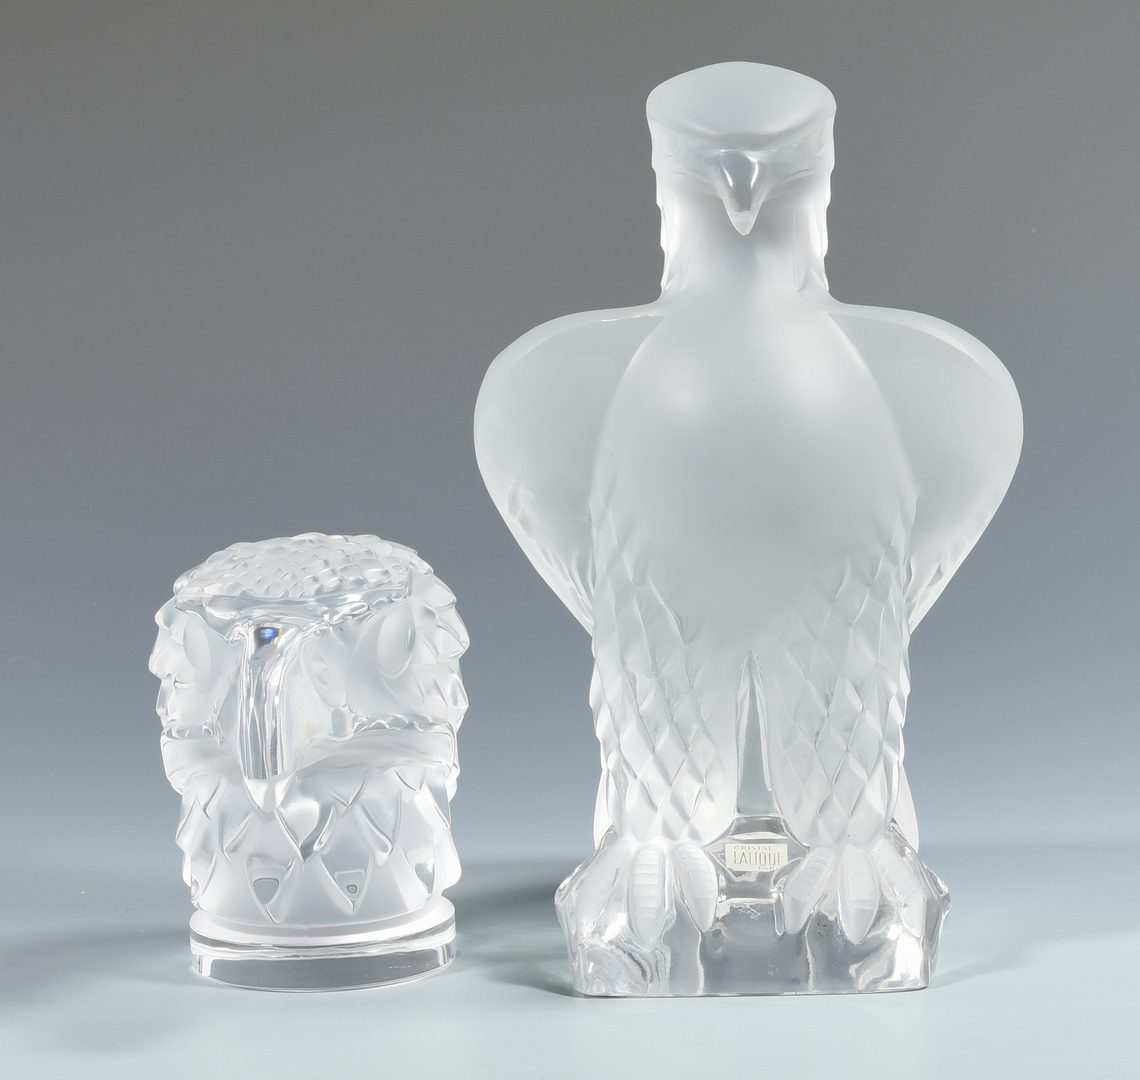 Lot 508: Lalique Glass Eagle Sculpture, Paperweight